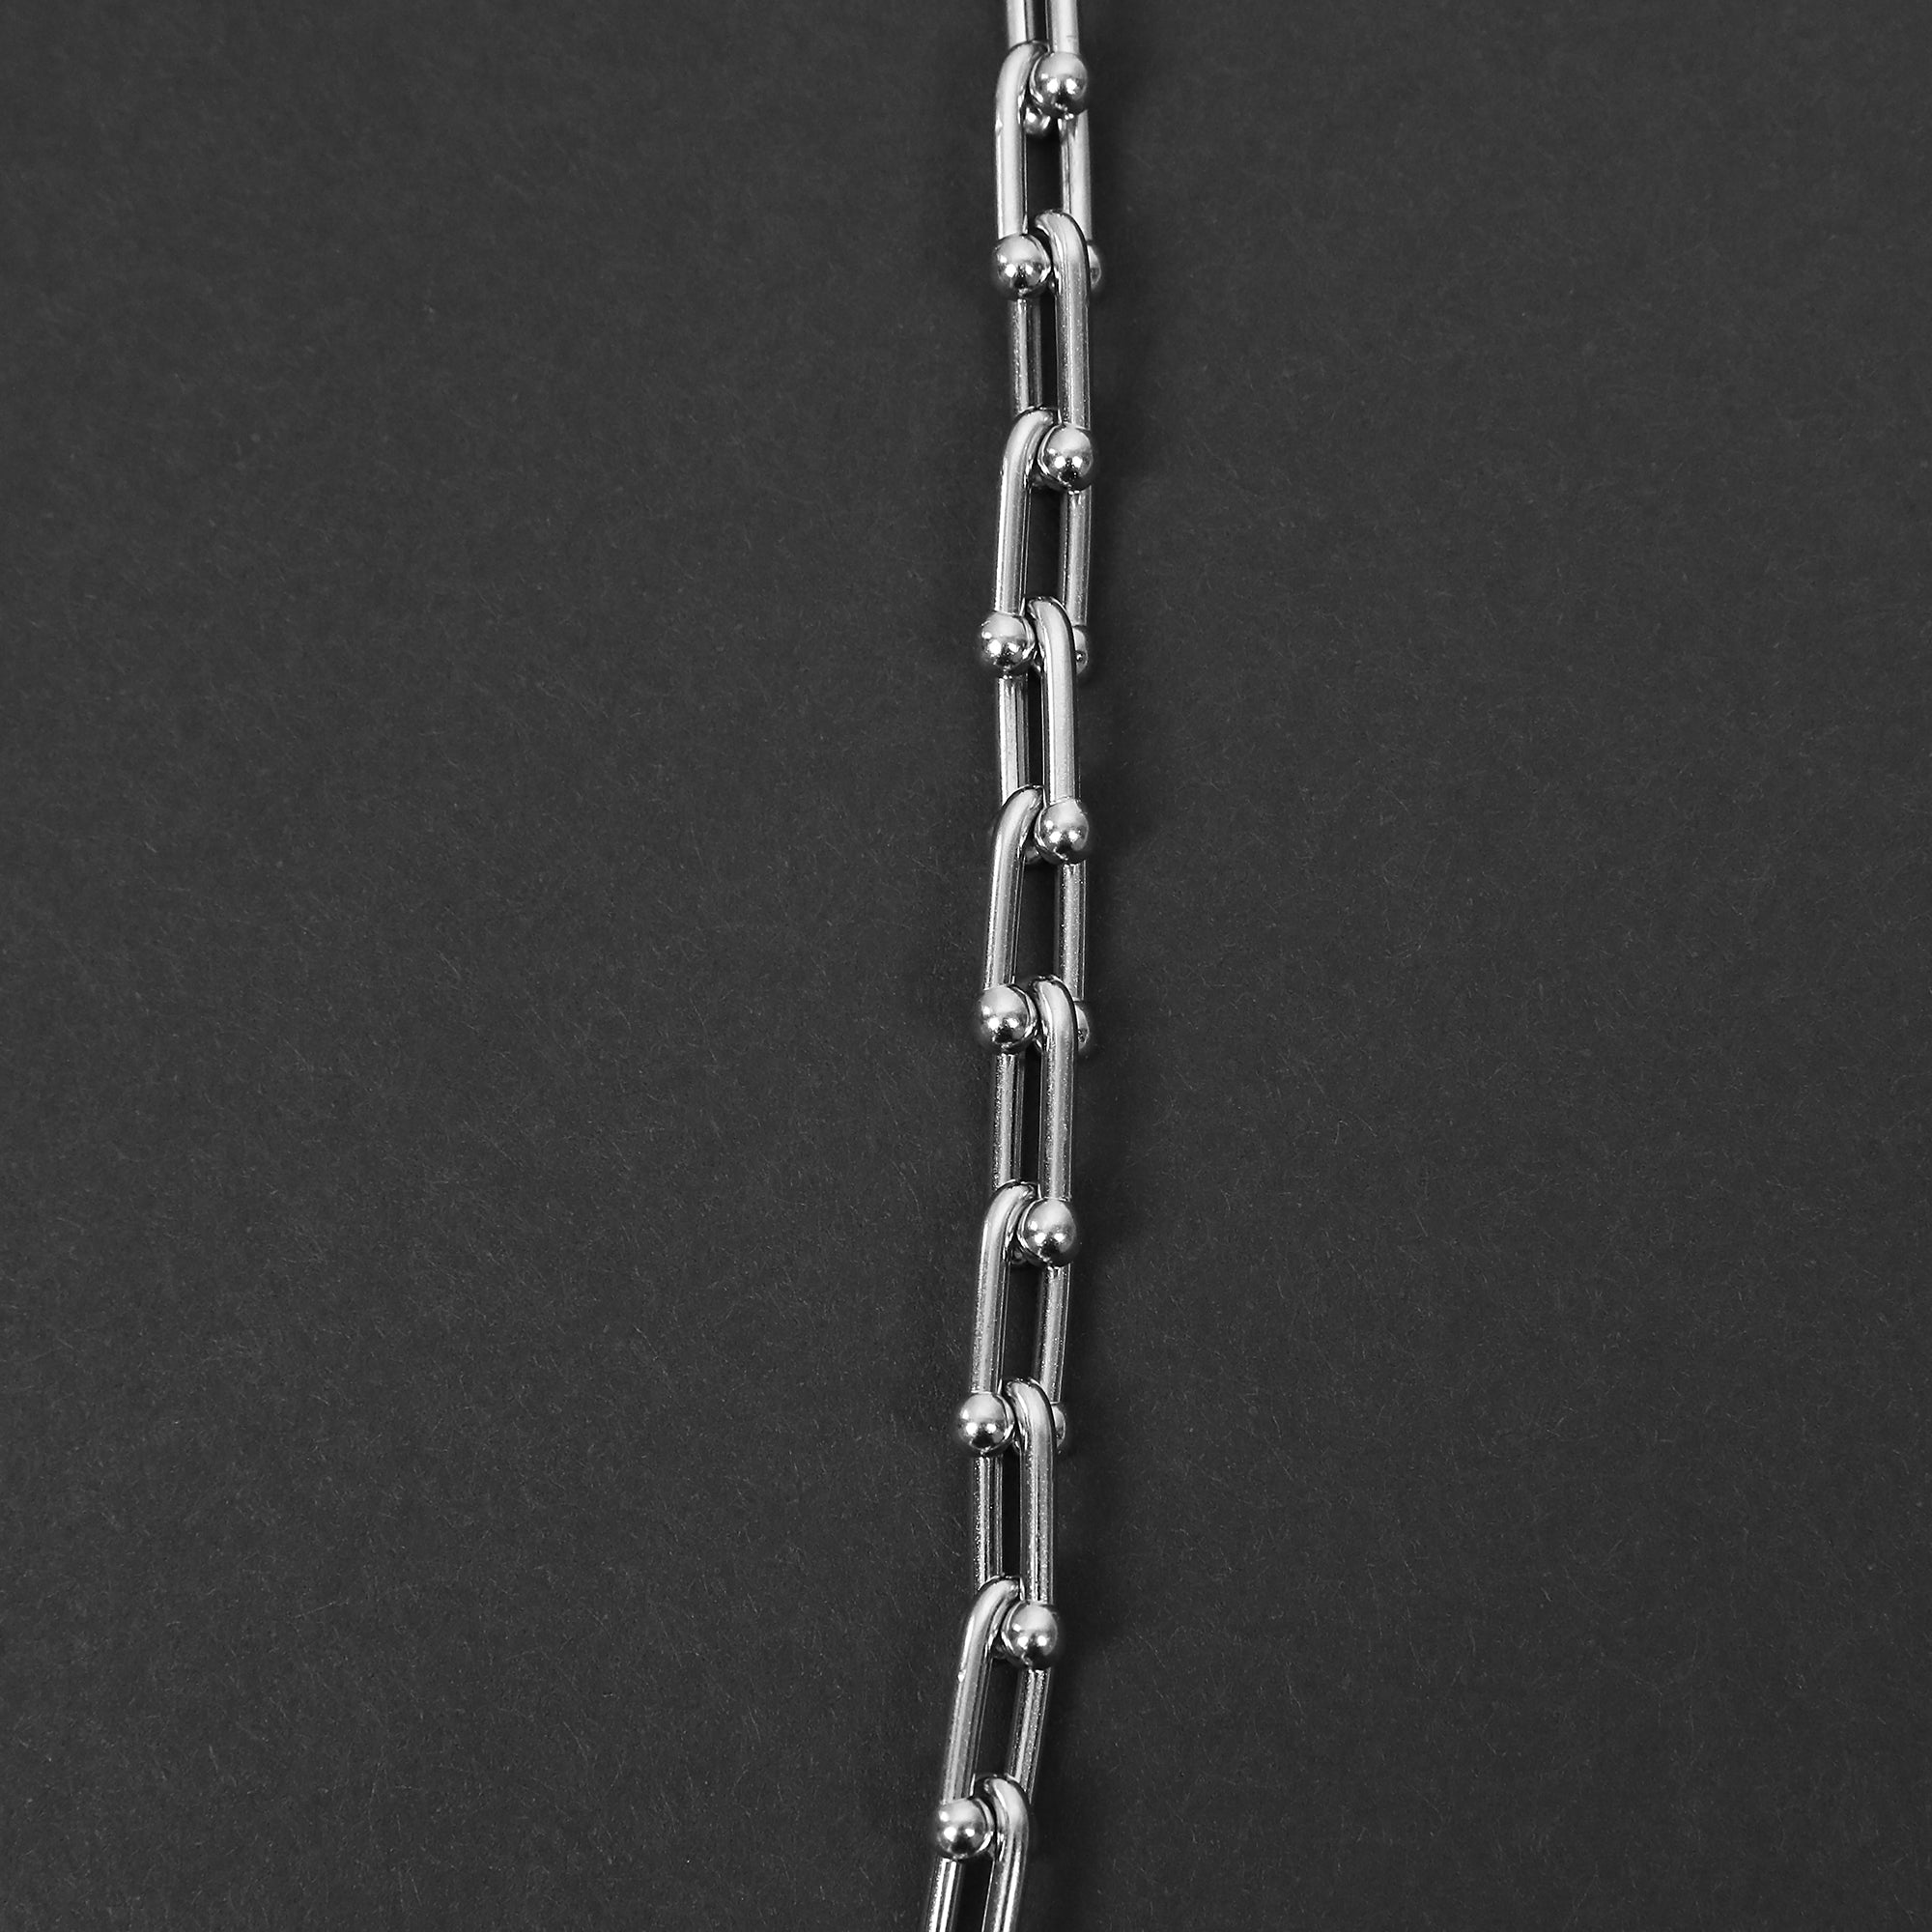 Connective Chain Bracelet - Silver 7.5mm